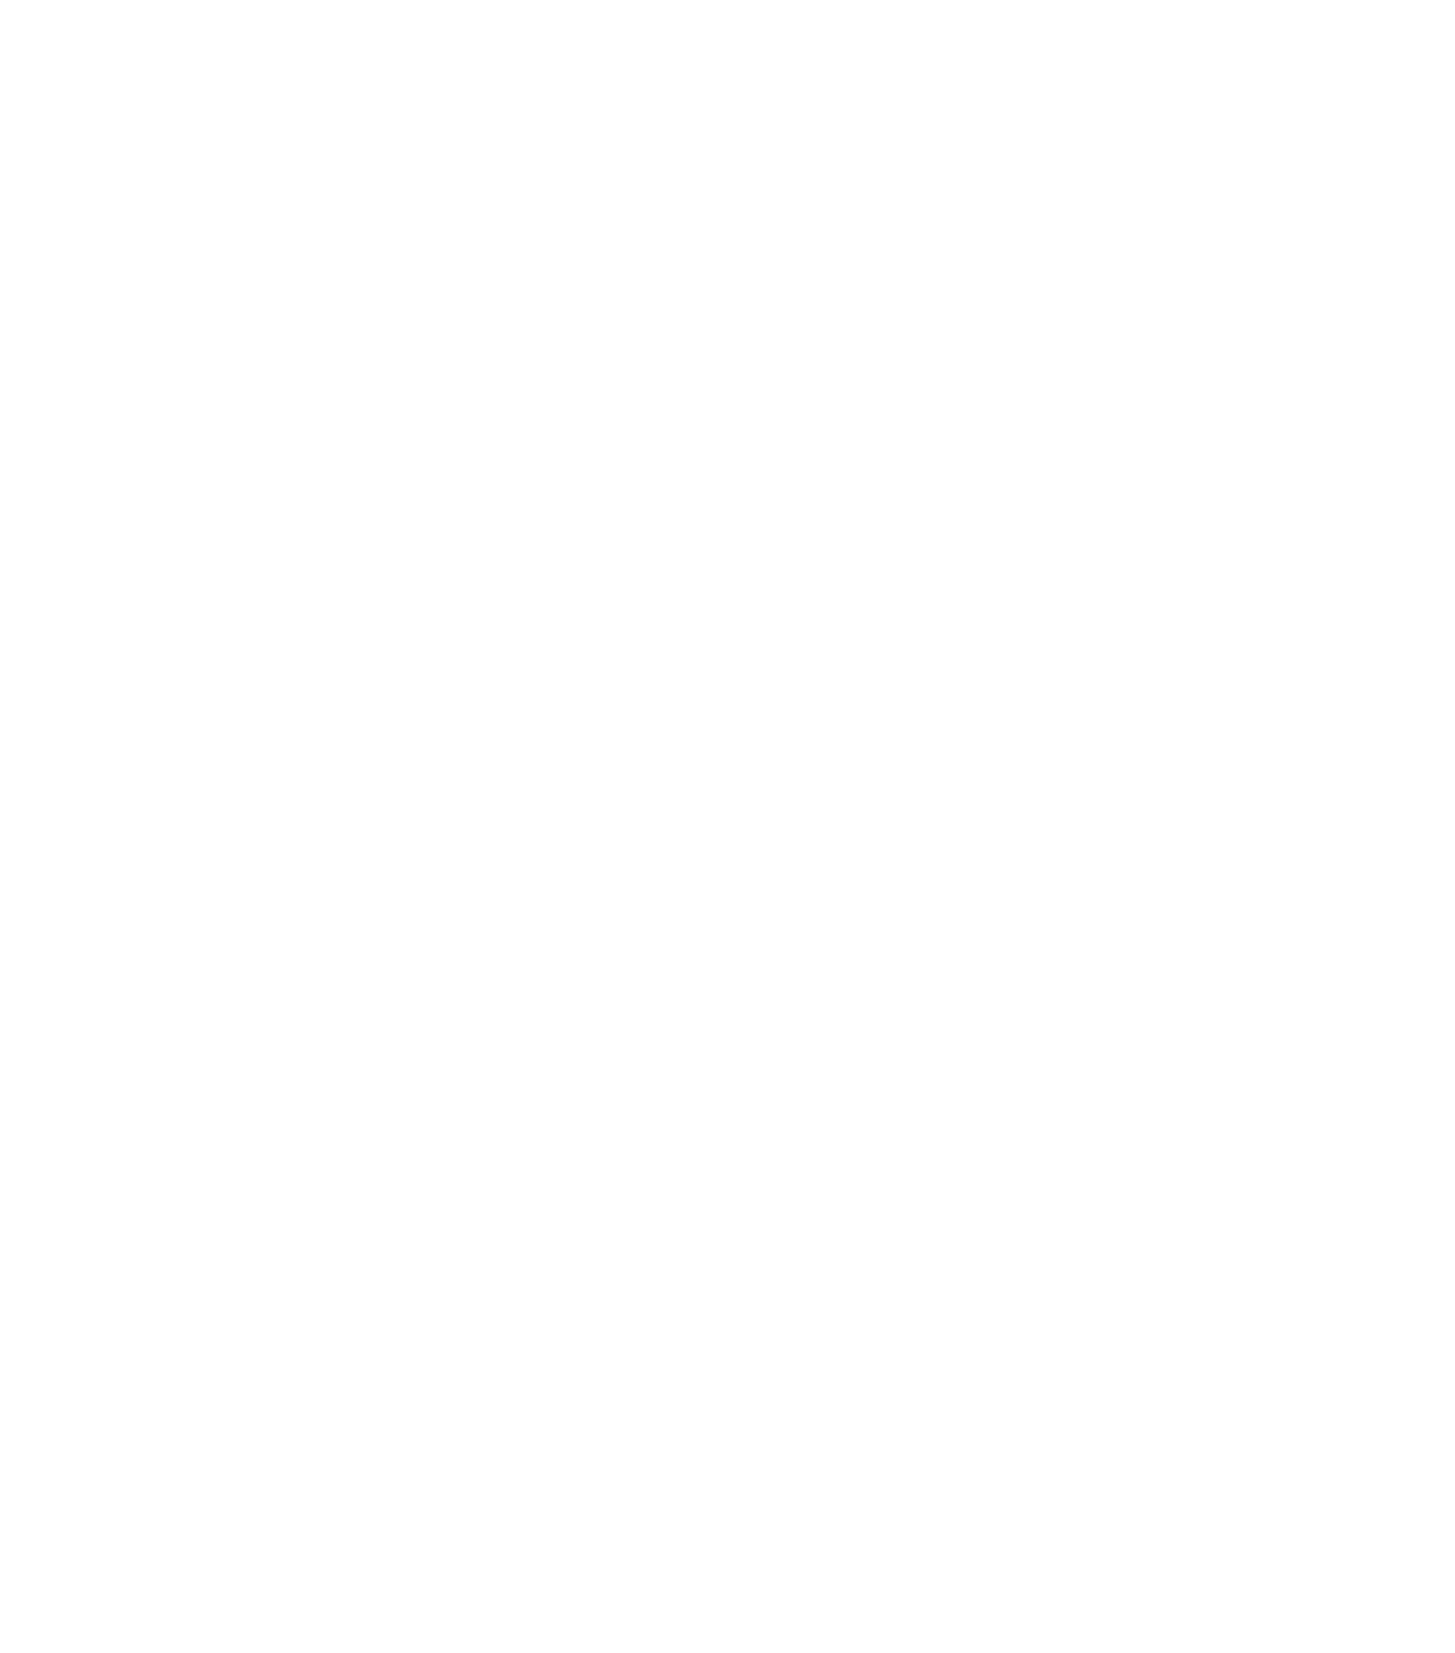 Sanofi logo for dark backgrounds (transparent PNG)